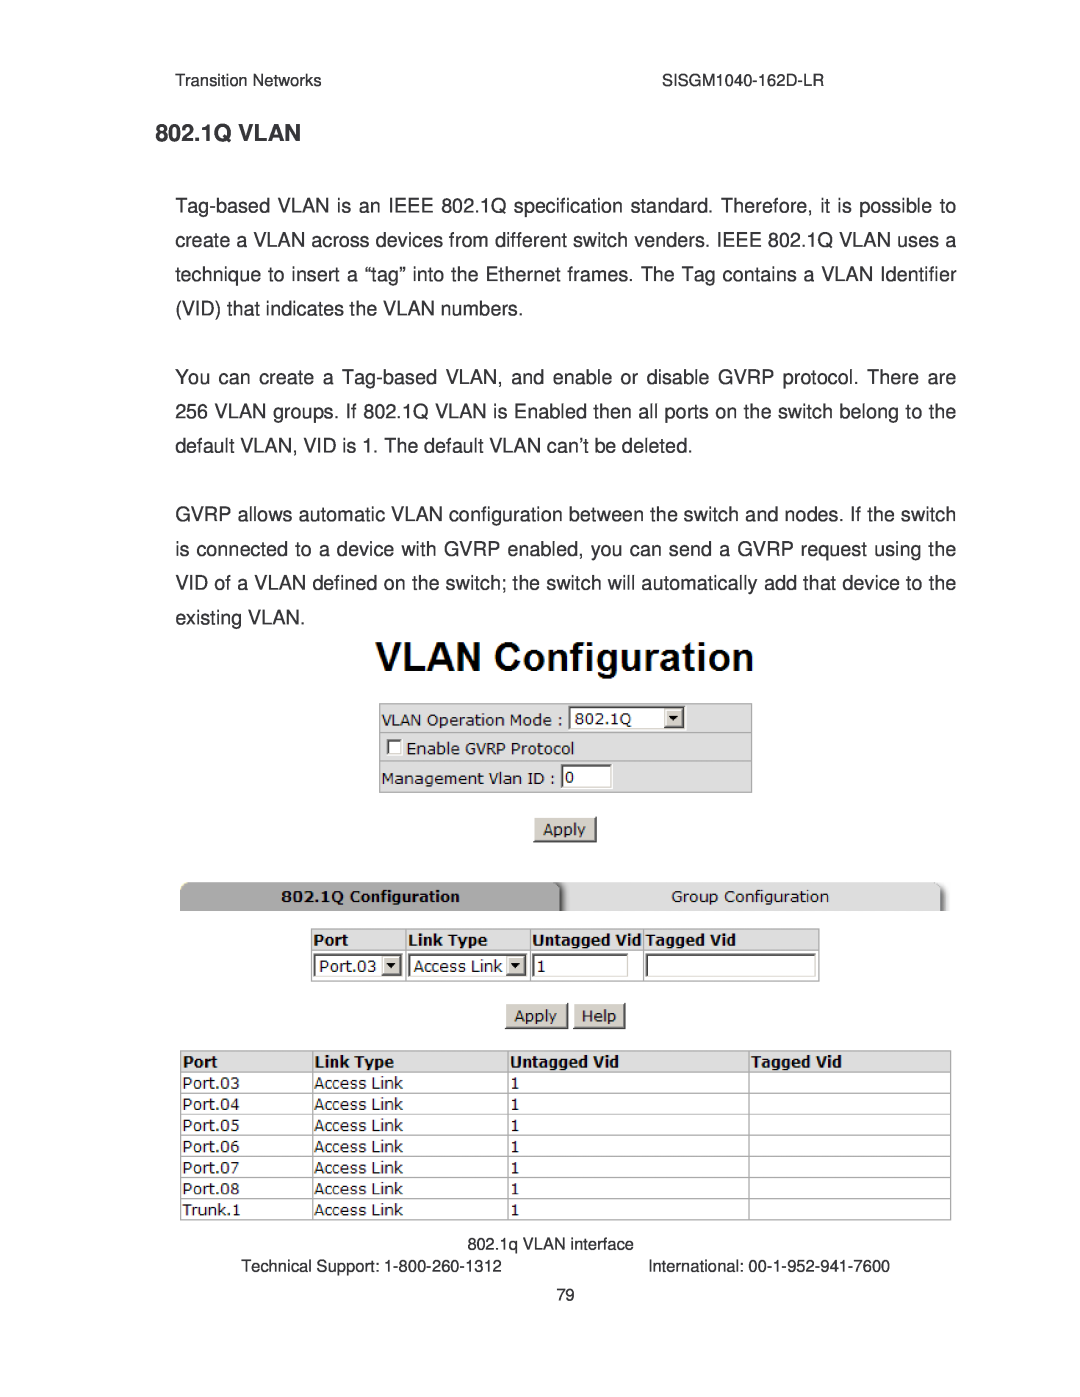 Transition Networks SISGM1040-162D manual 802.1Q VLAN 